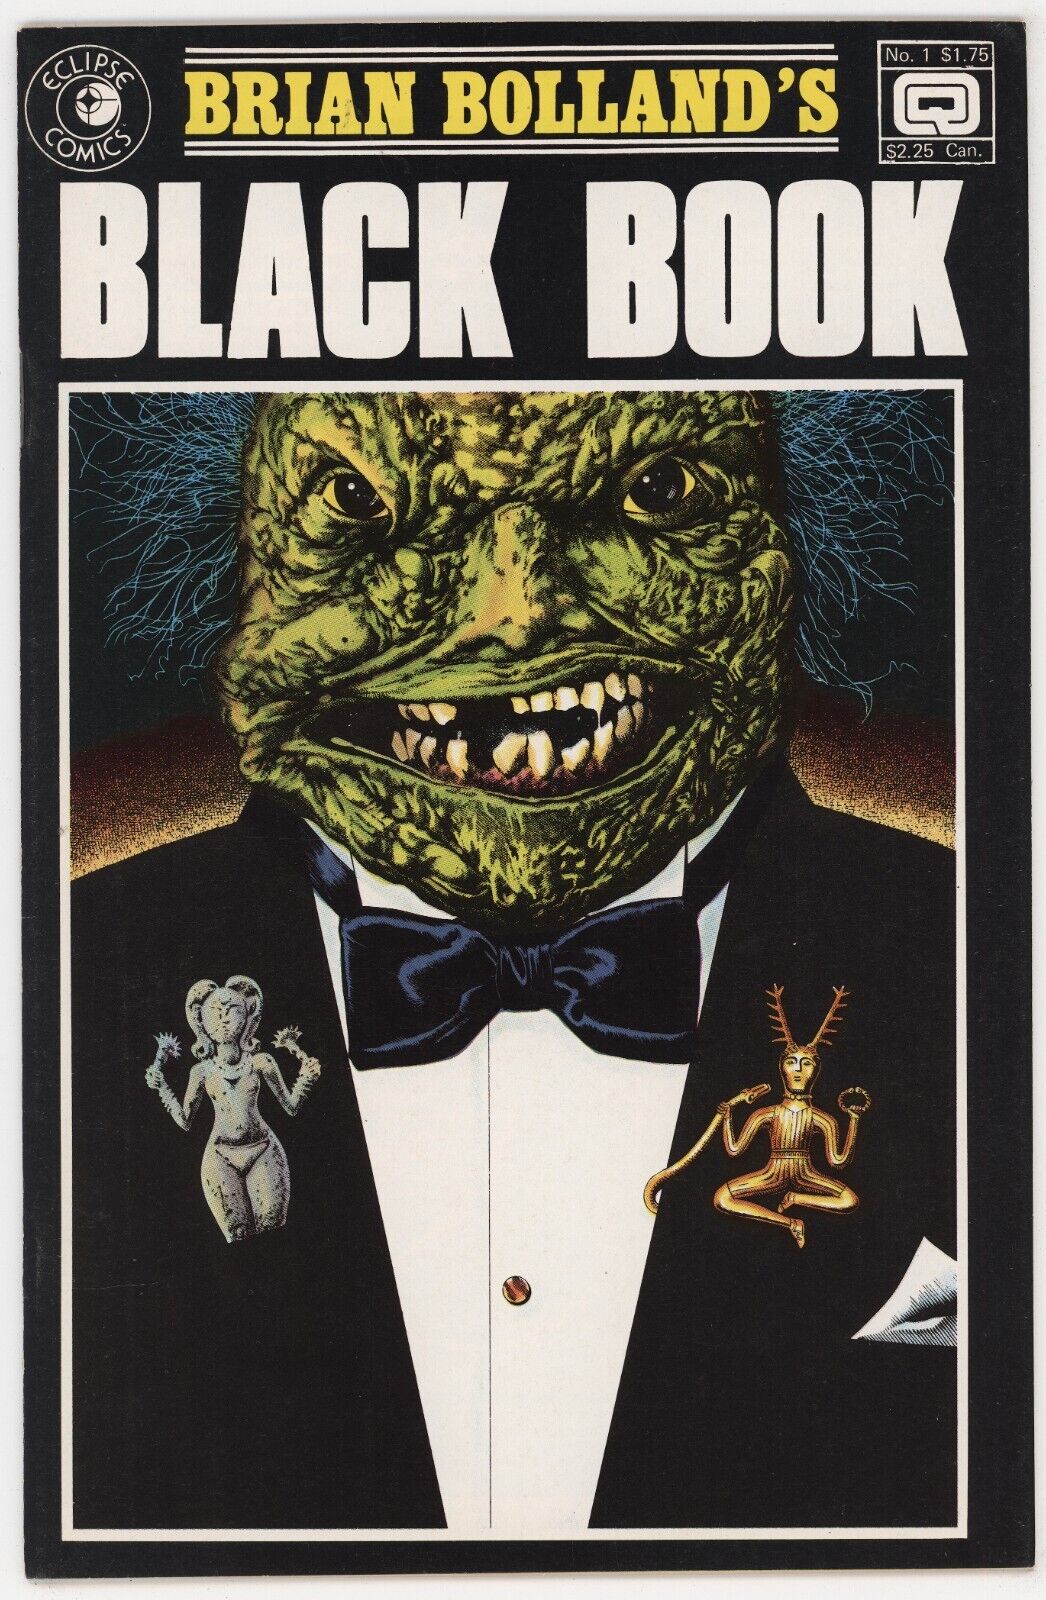 Black Book (Brian Bolland\'s) #1 VFNM 9.0 1985 Brian Bolland Cover